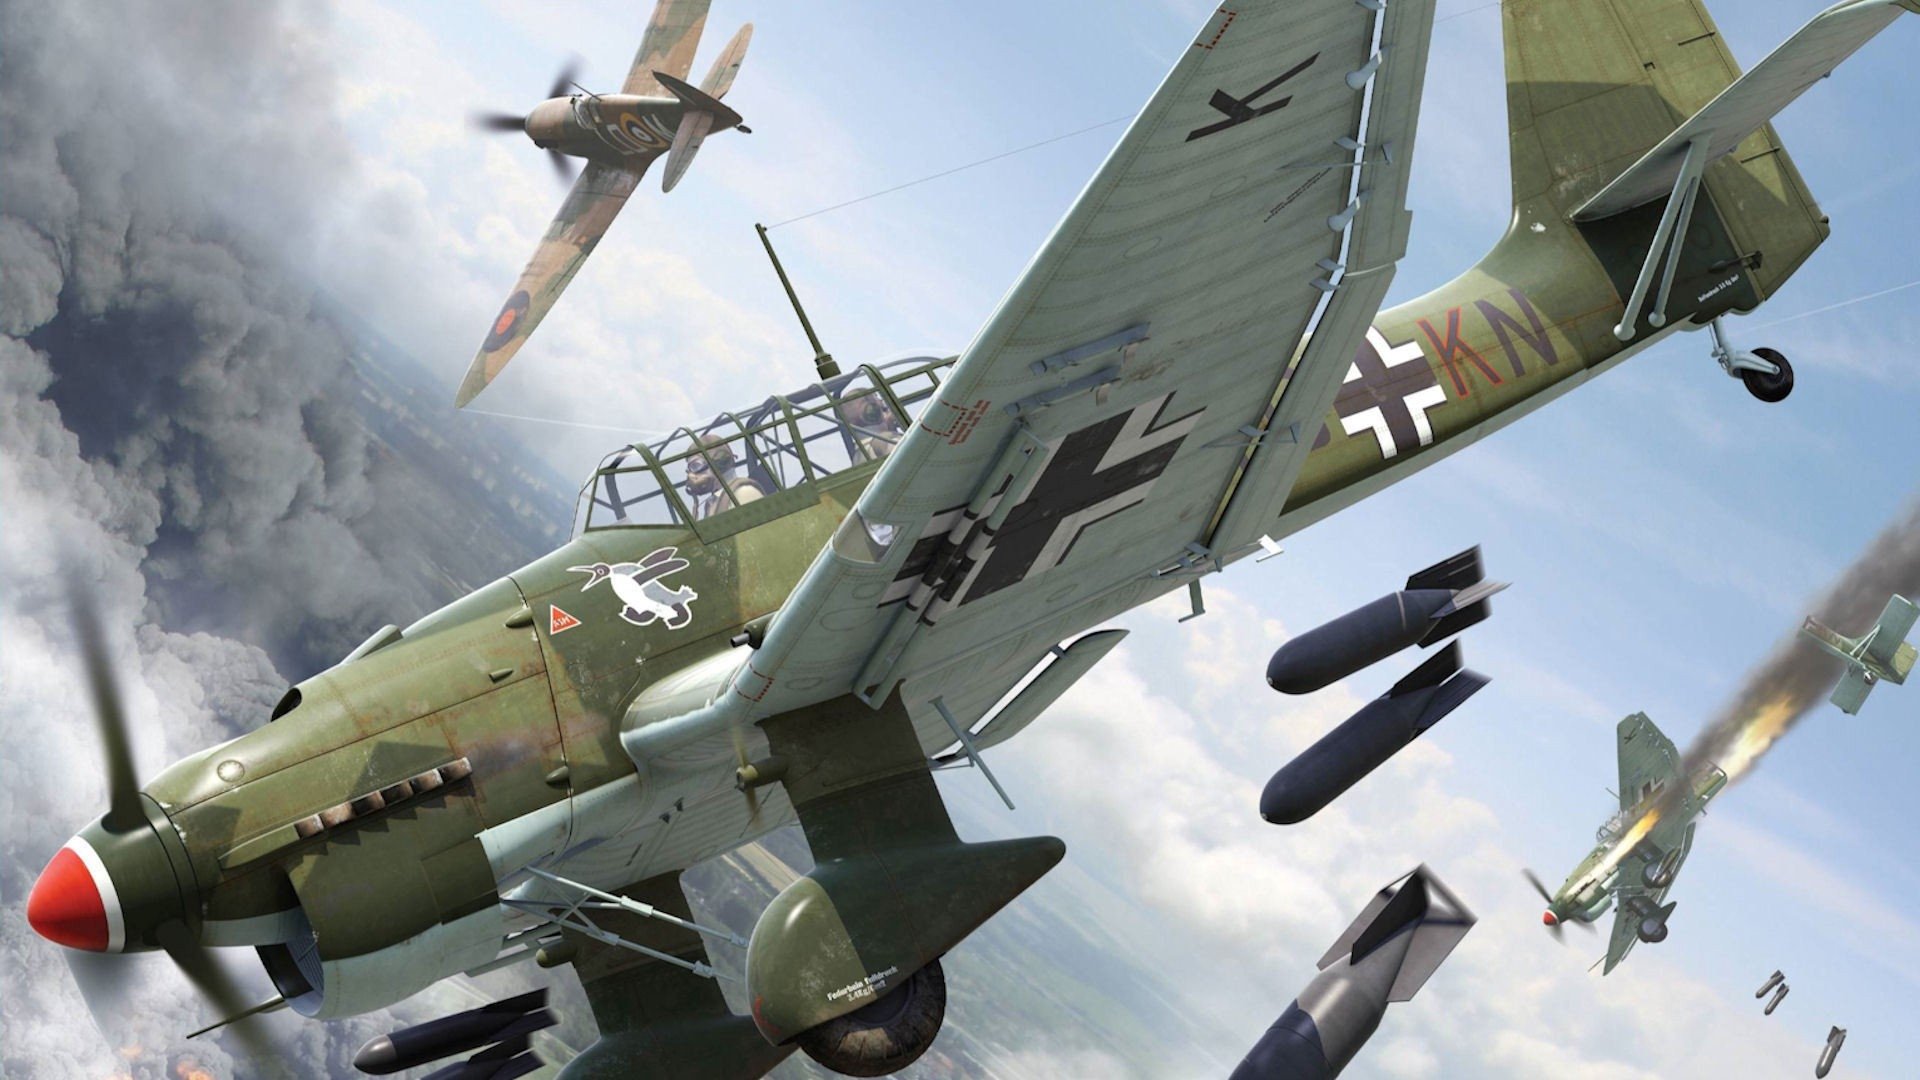 Junkers Ju 87 Backgrounds, Compatible - PC, Mobile, Gadgets| 1920x1080 px